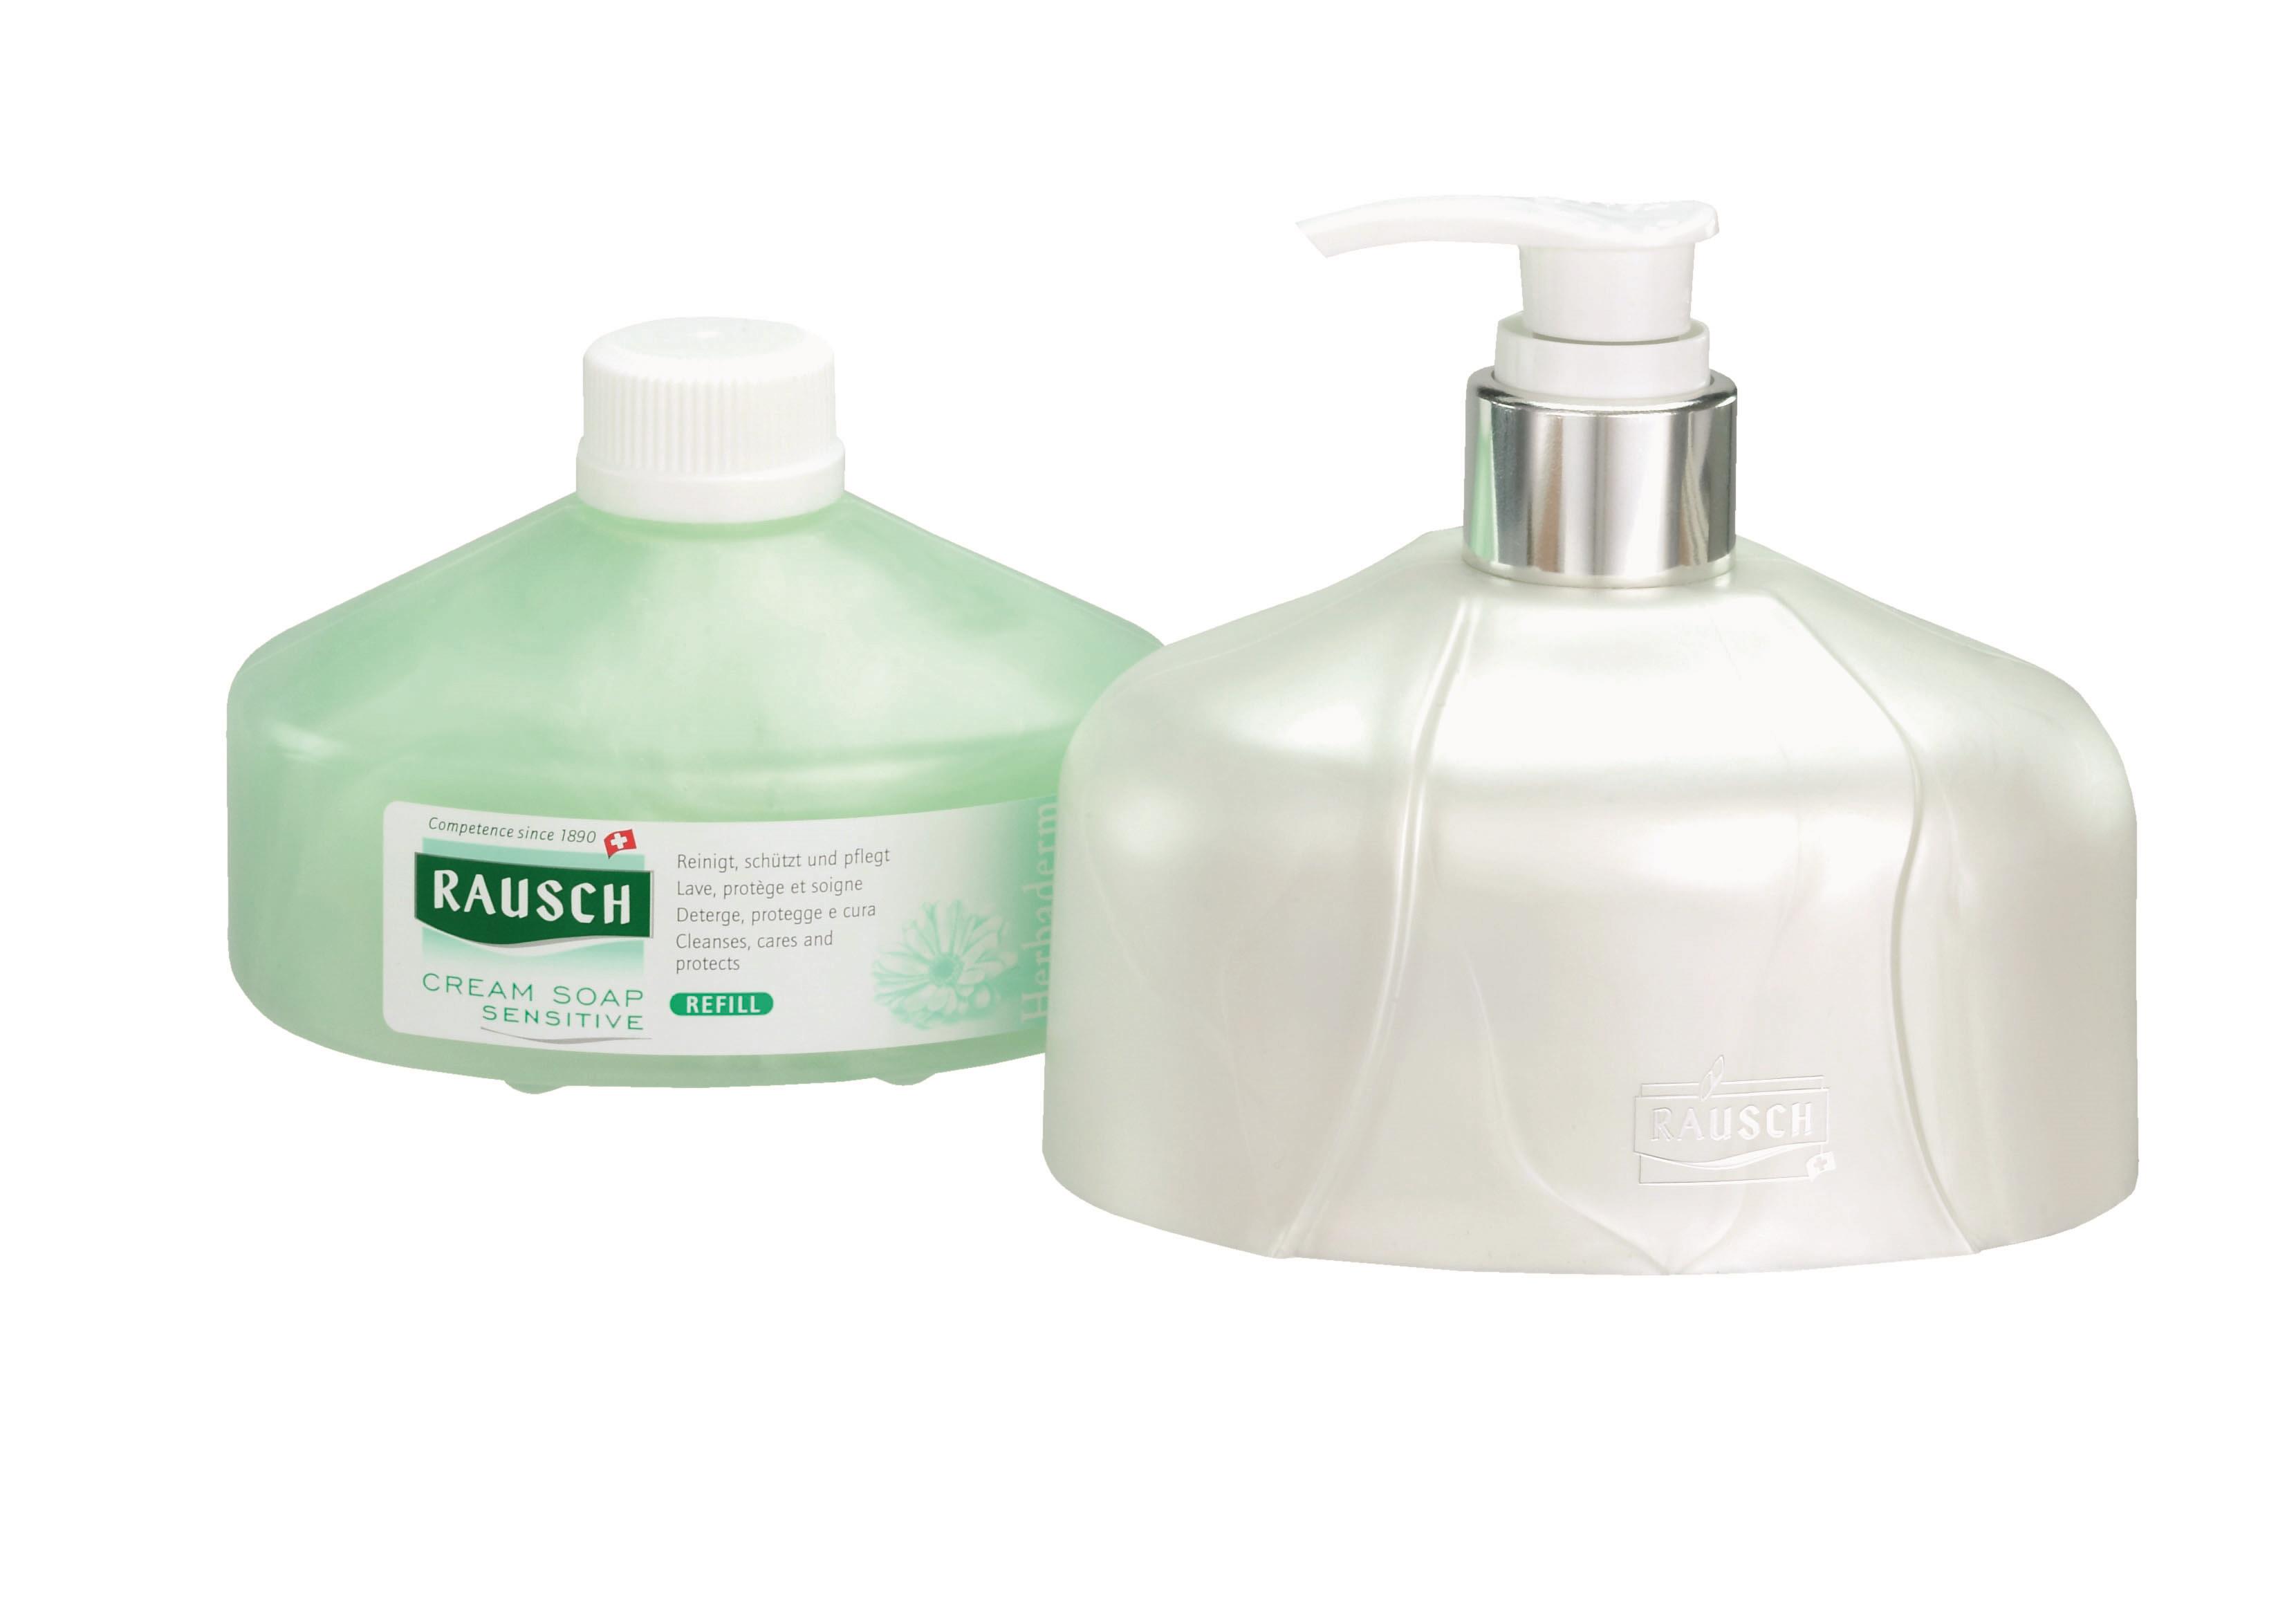 Rausch Cream Soap Sensitive Original